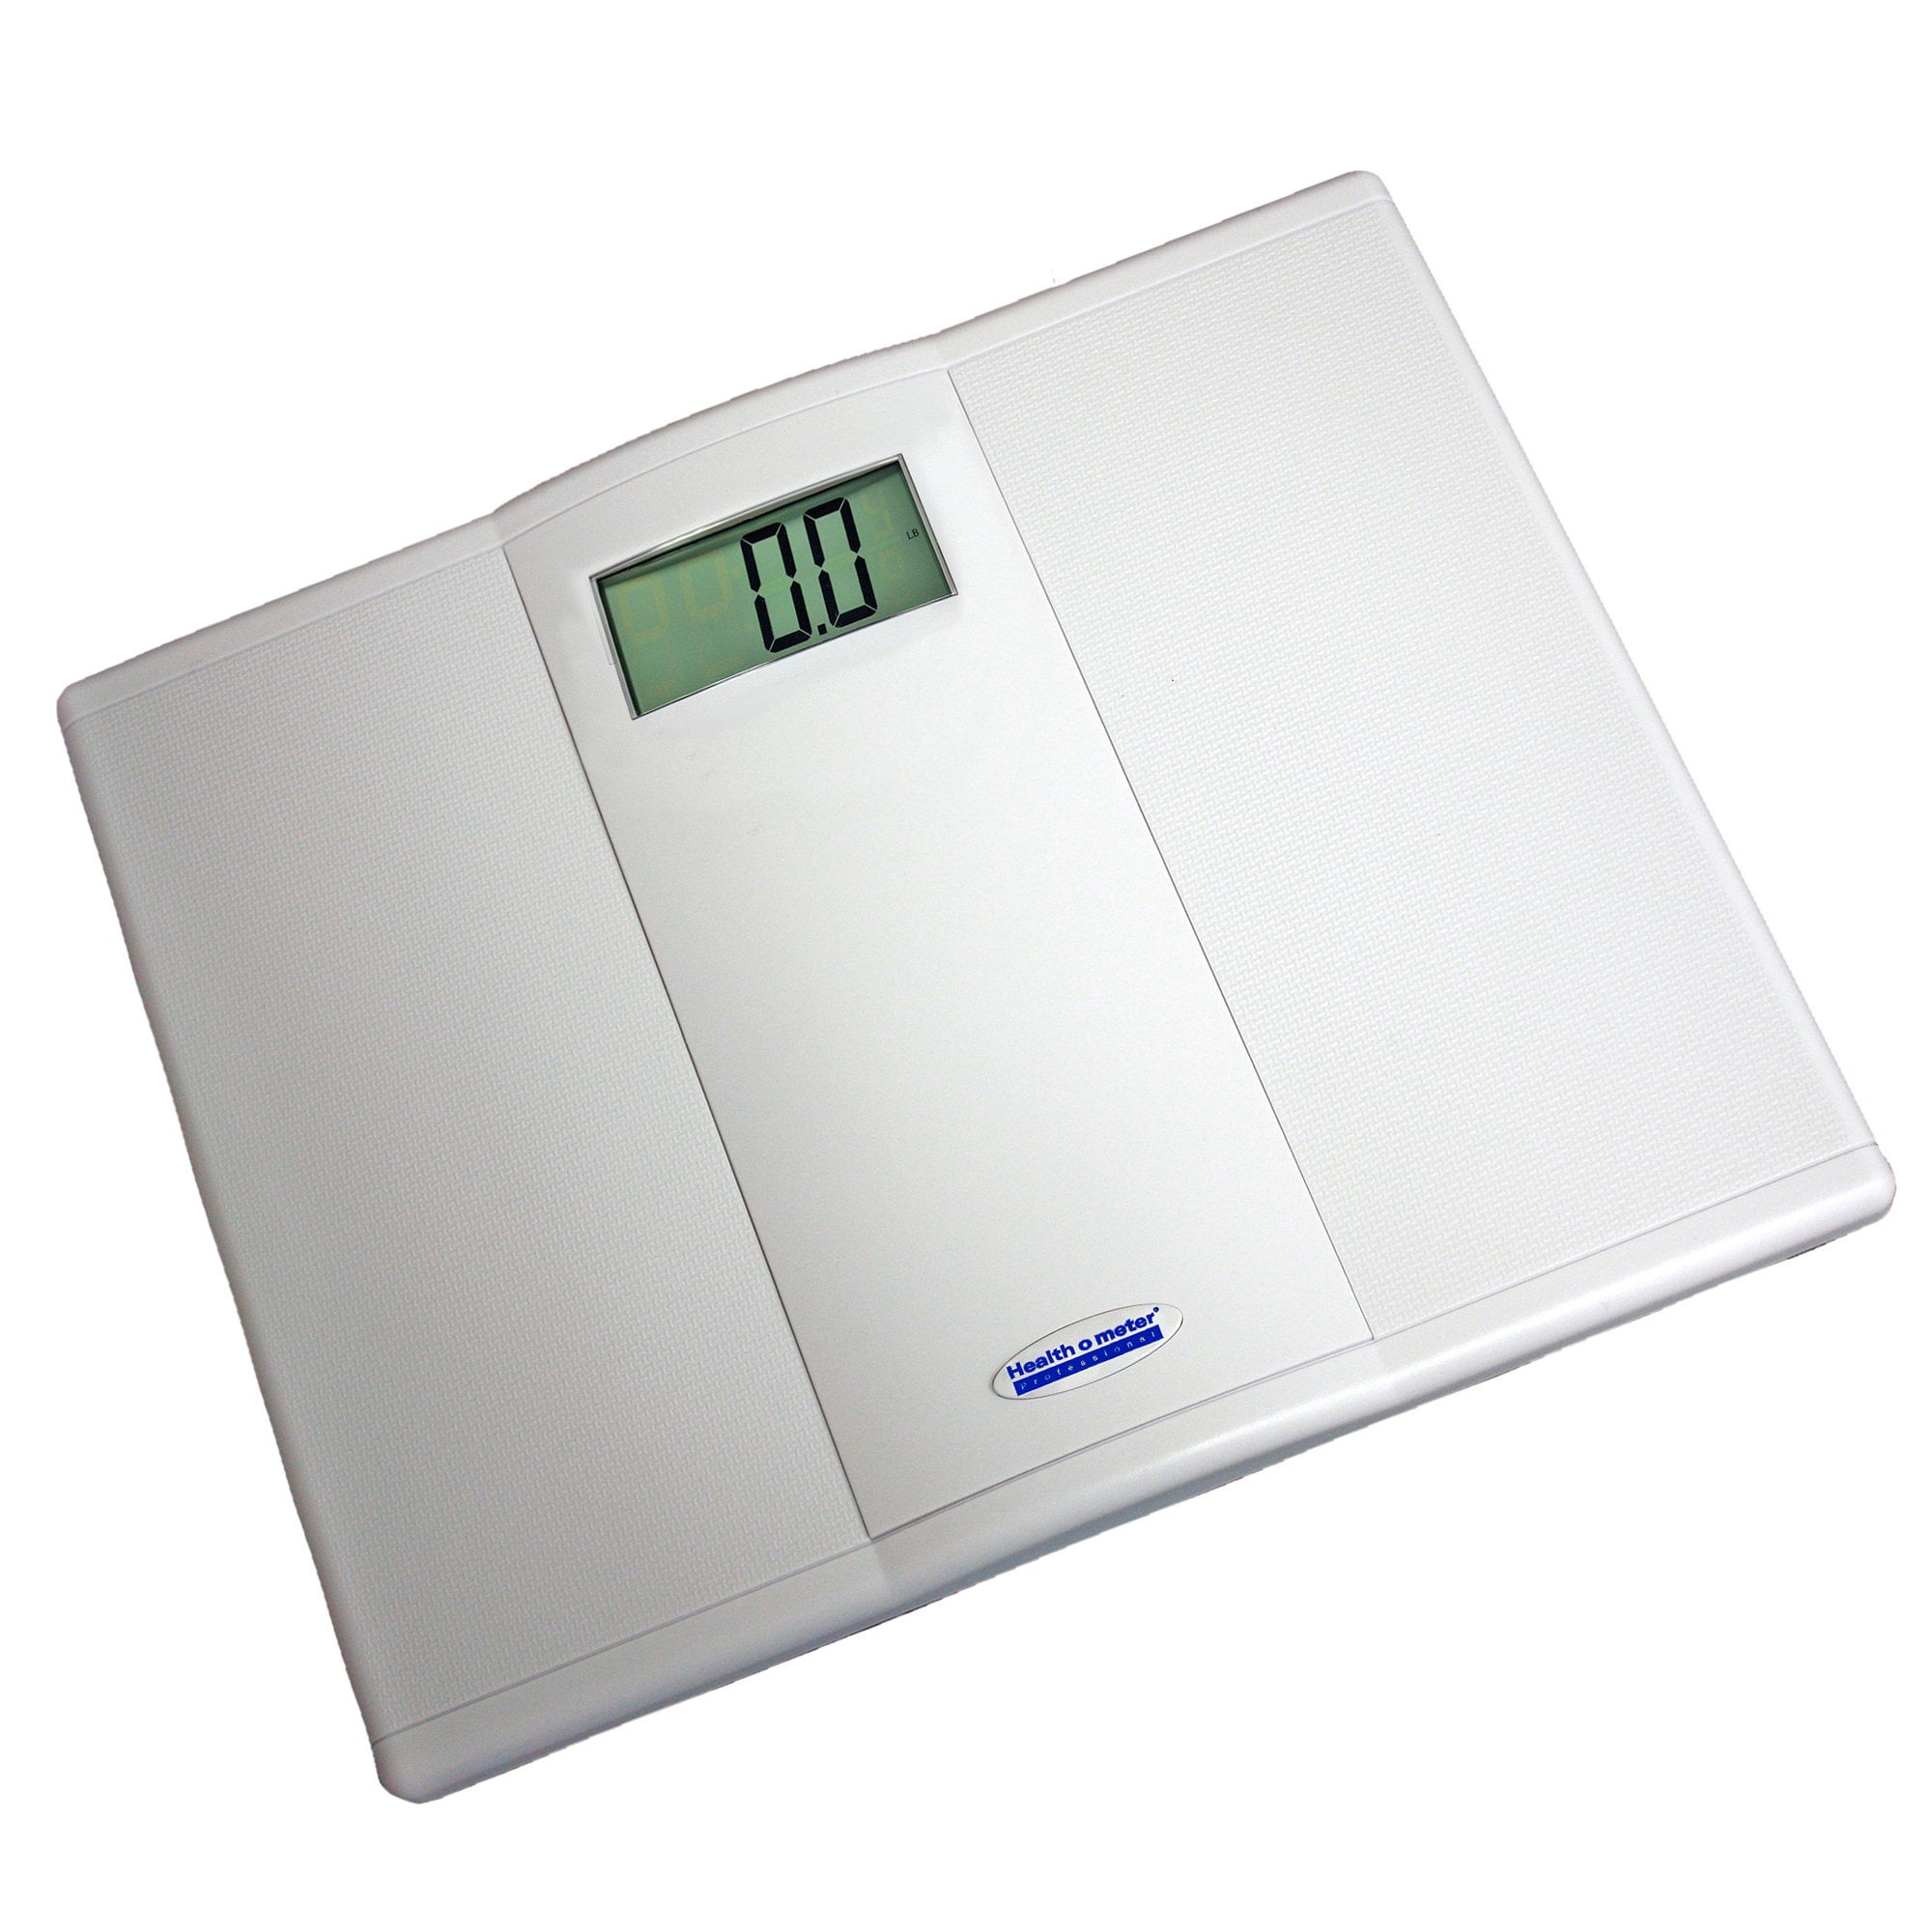  Health O Meter Floor Scale 330 x 1 Pound/150 x 0.5 Kilogram  11-1/2 x 10-3/4 Plat. W/ 6-1/2 Dial : Health & Household